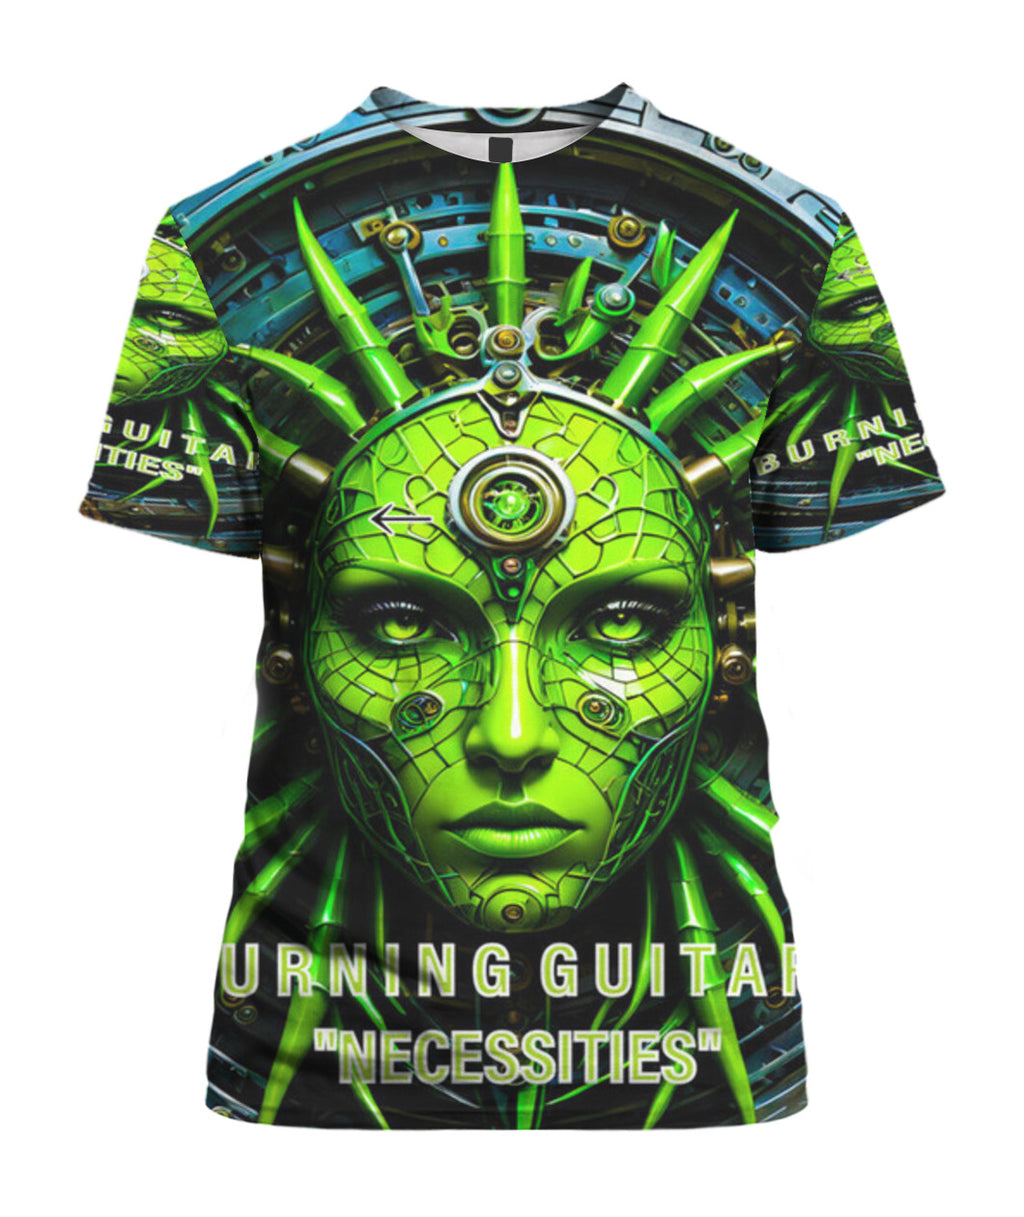 Green Face Unisex T-Shirt by Burning Guitars